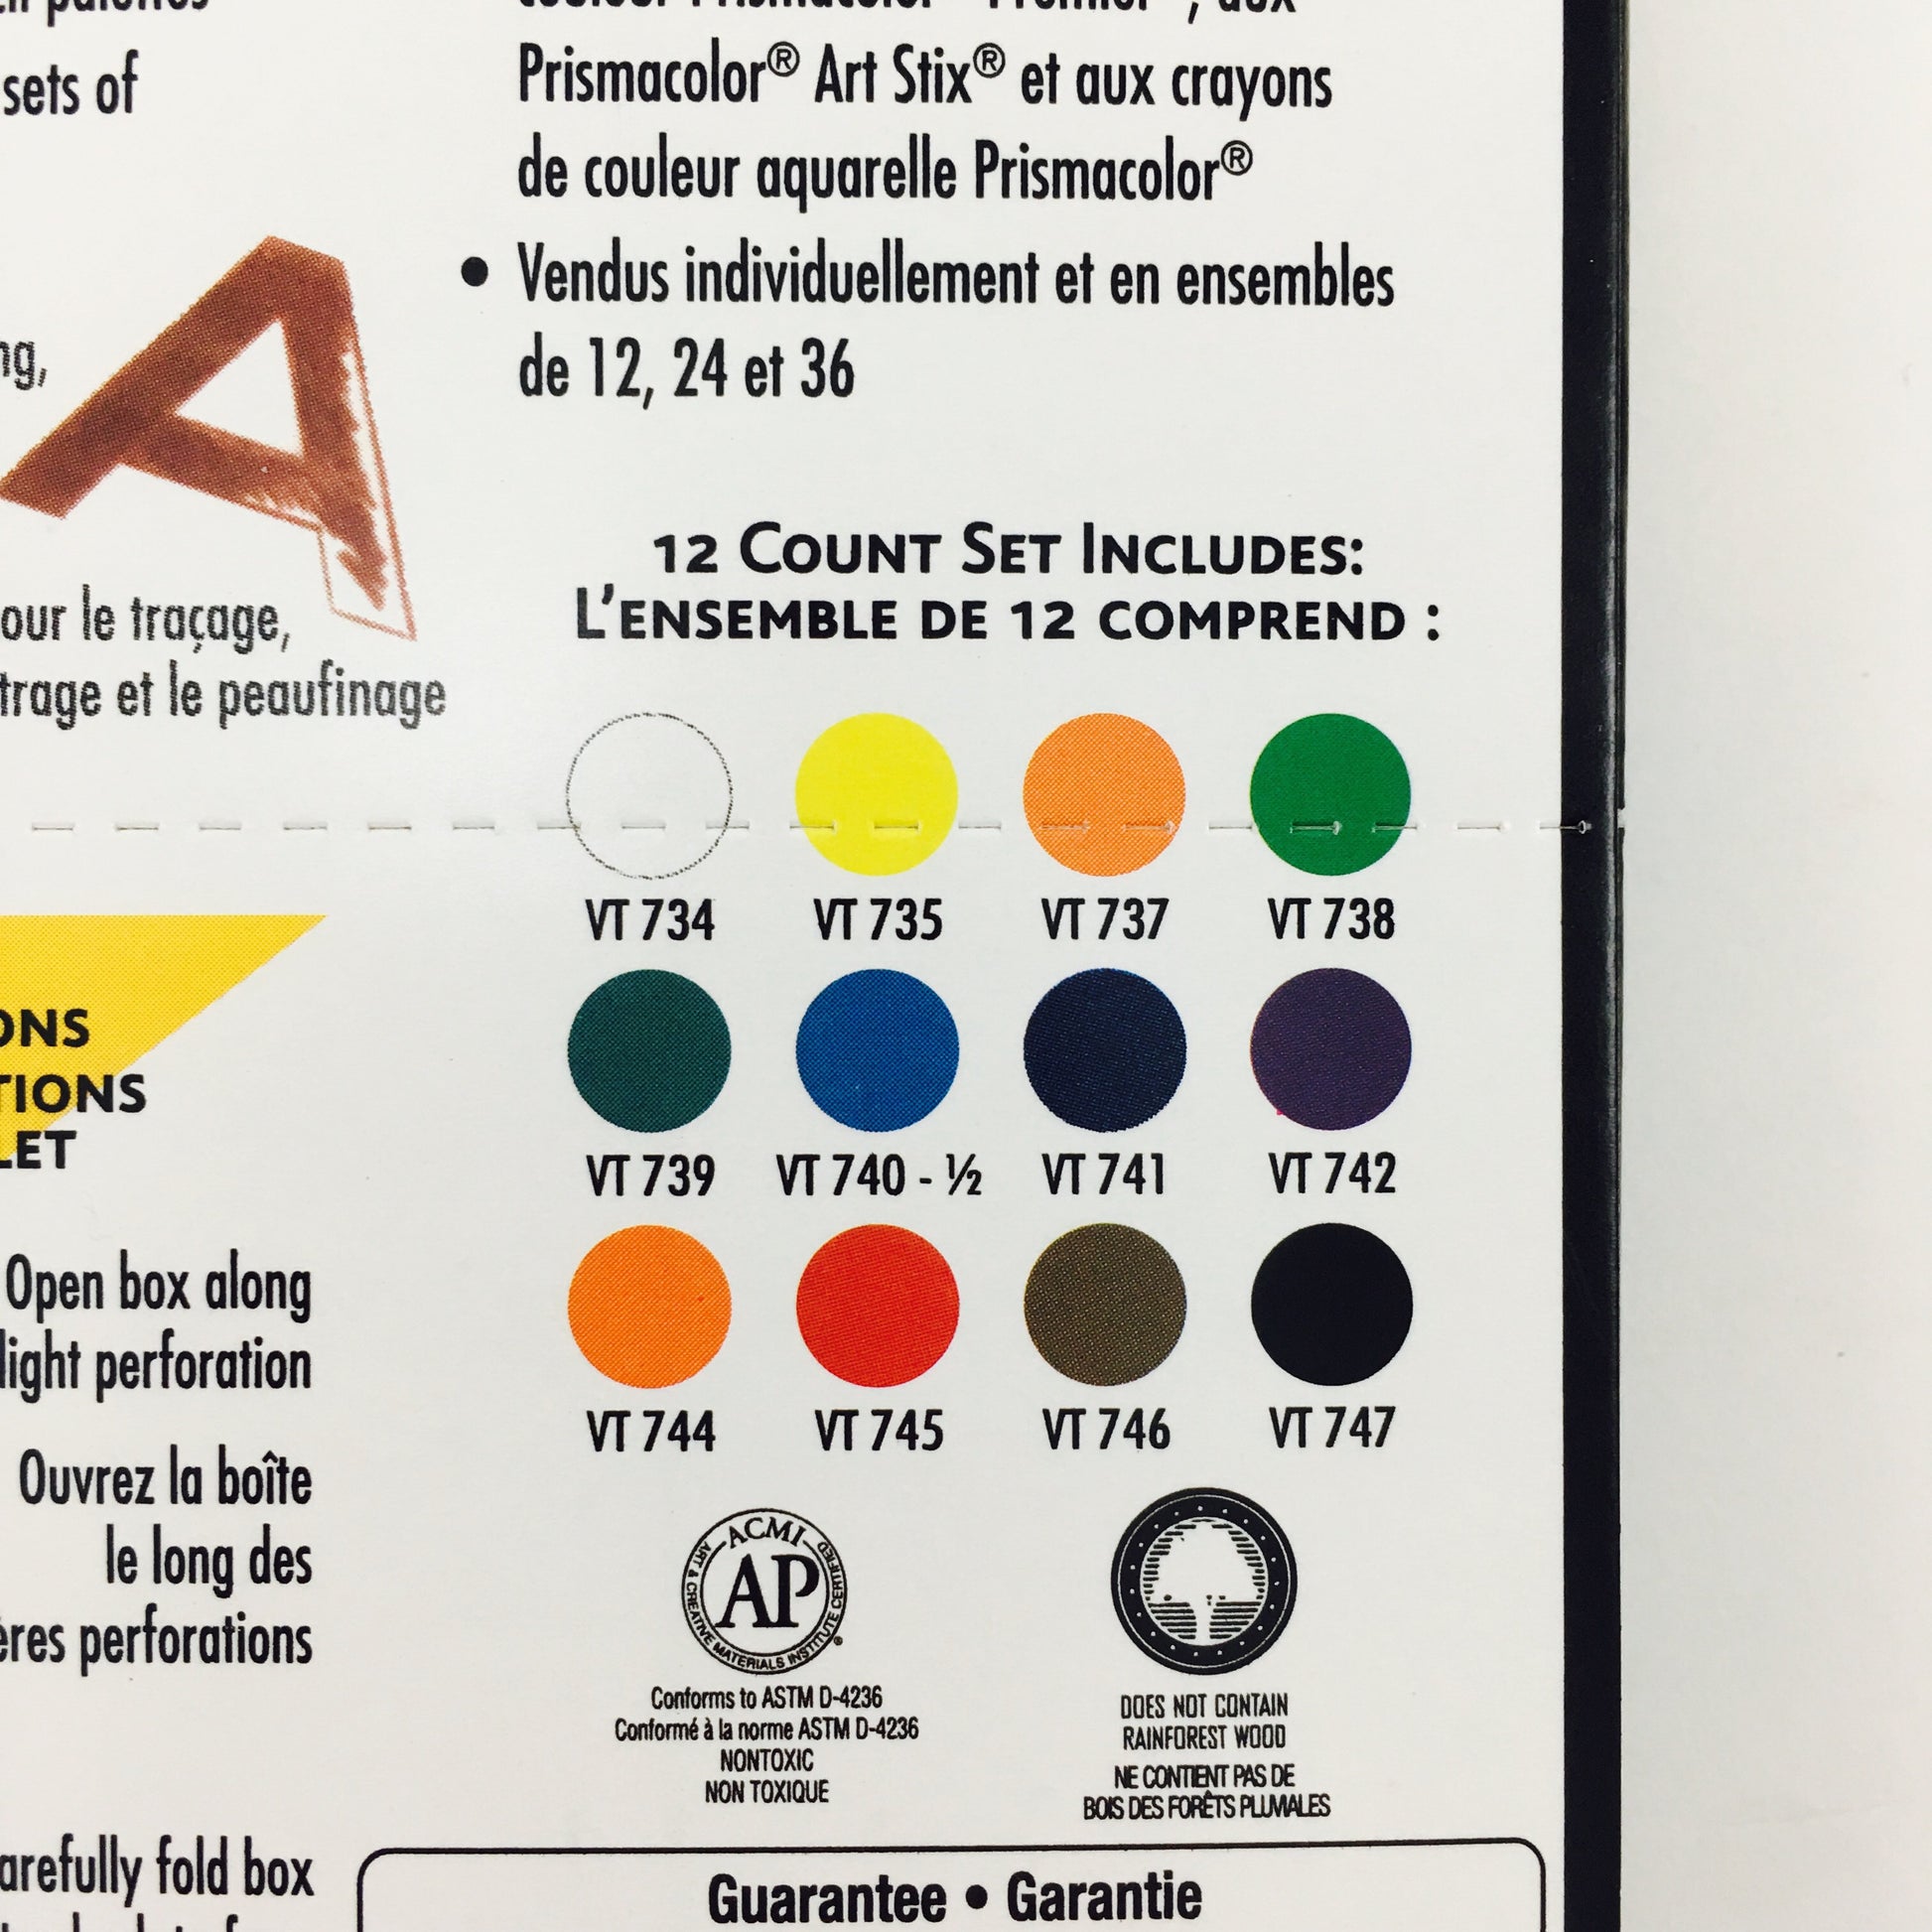 Prismacolor Colored Pencil - 12 pack